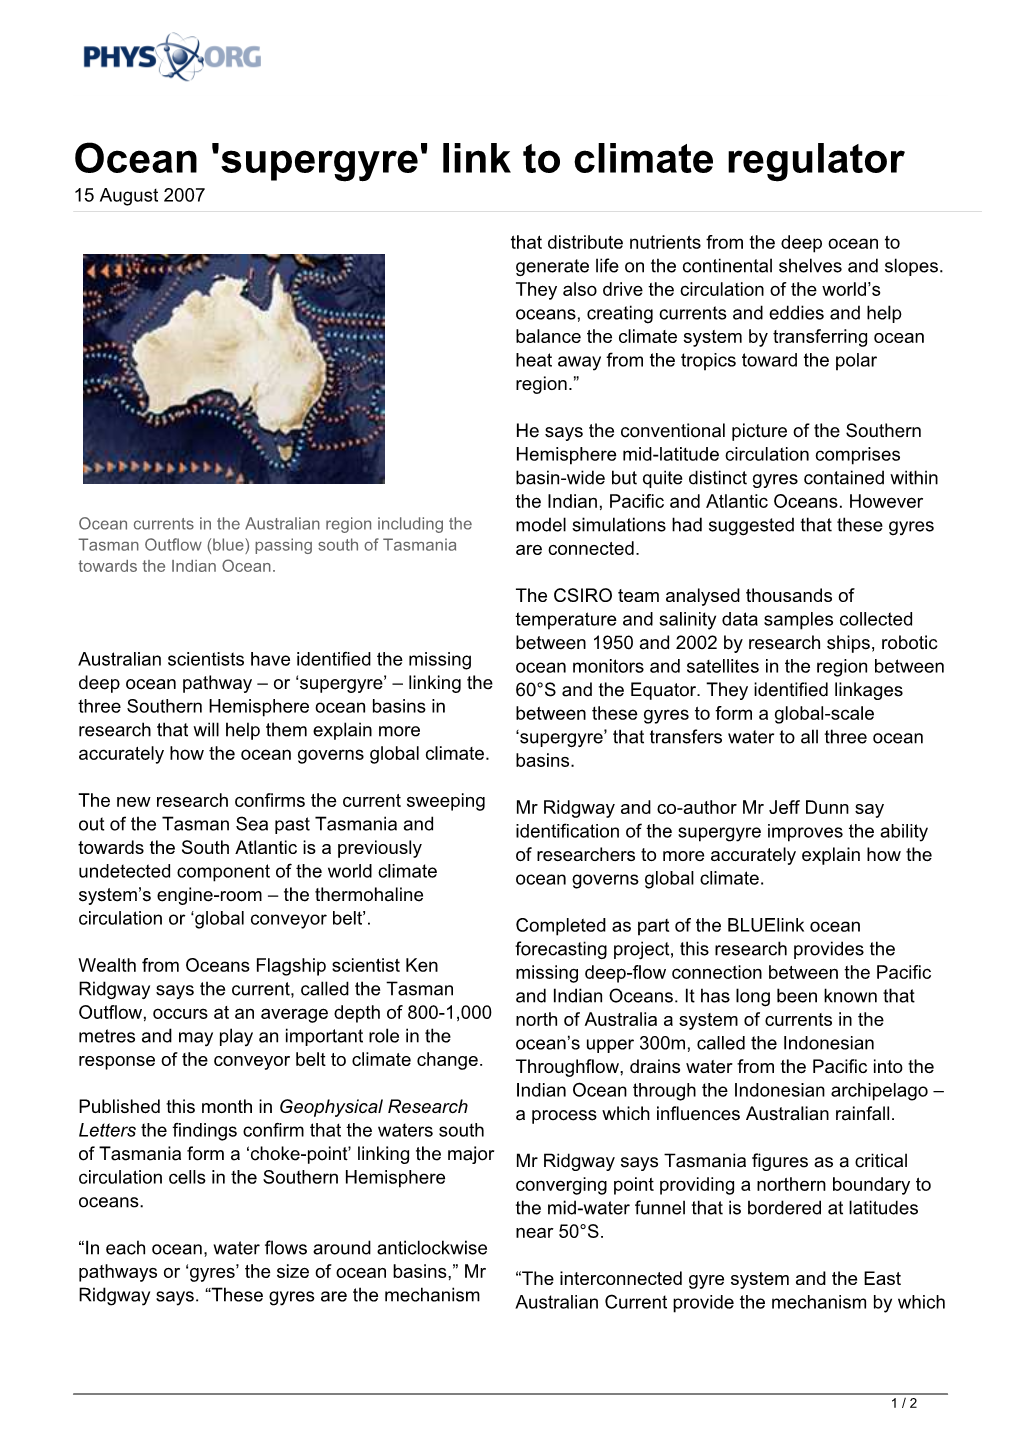 Ocean 'Supergyre' Link to Climate Regulator 15 August 2007